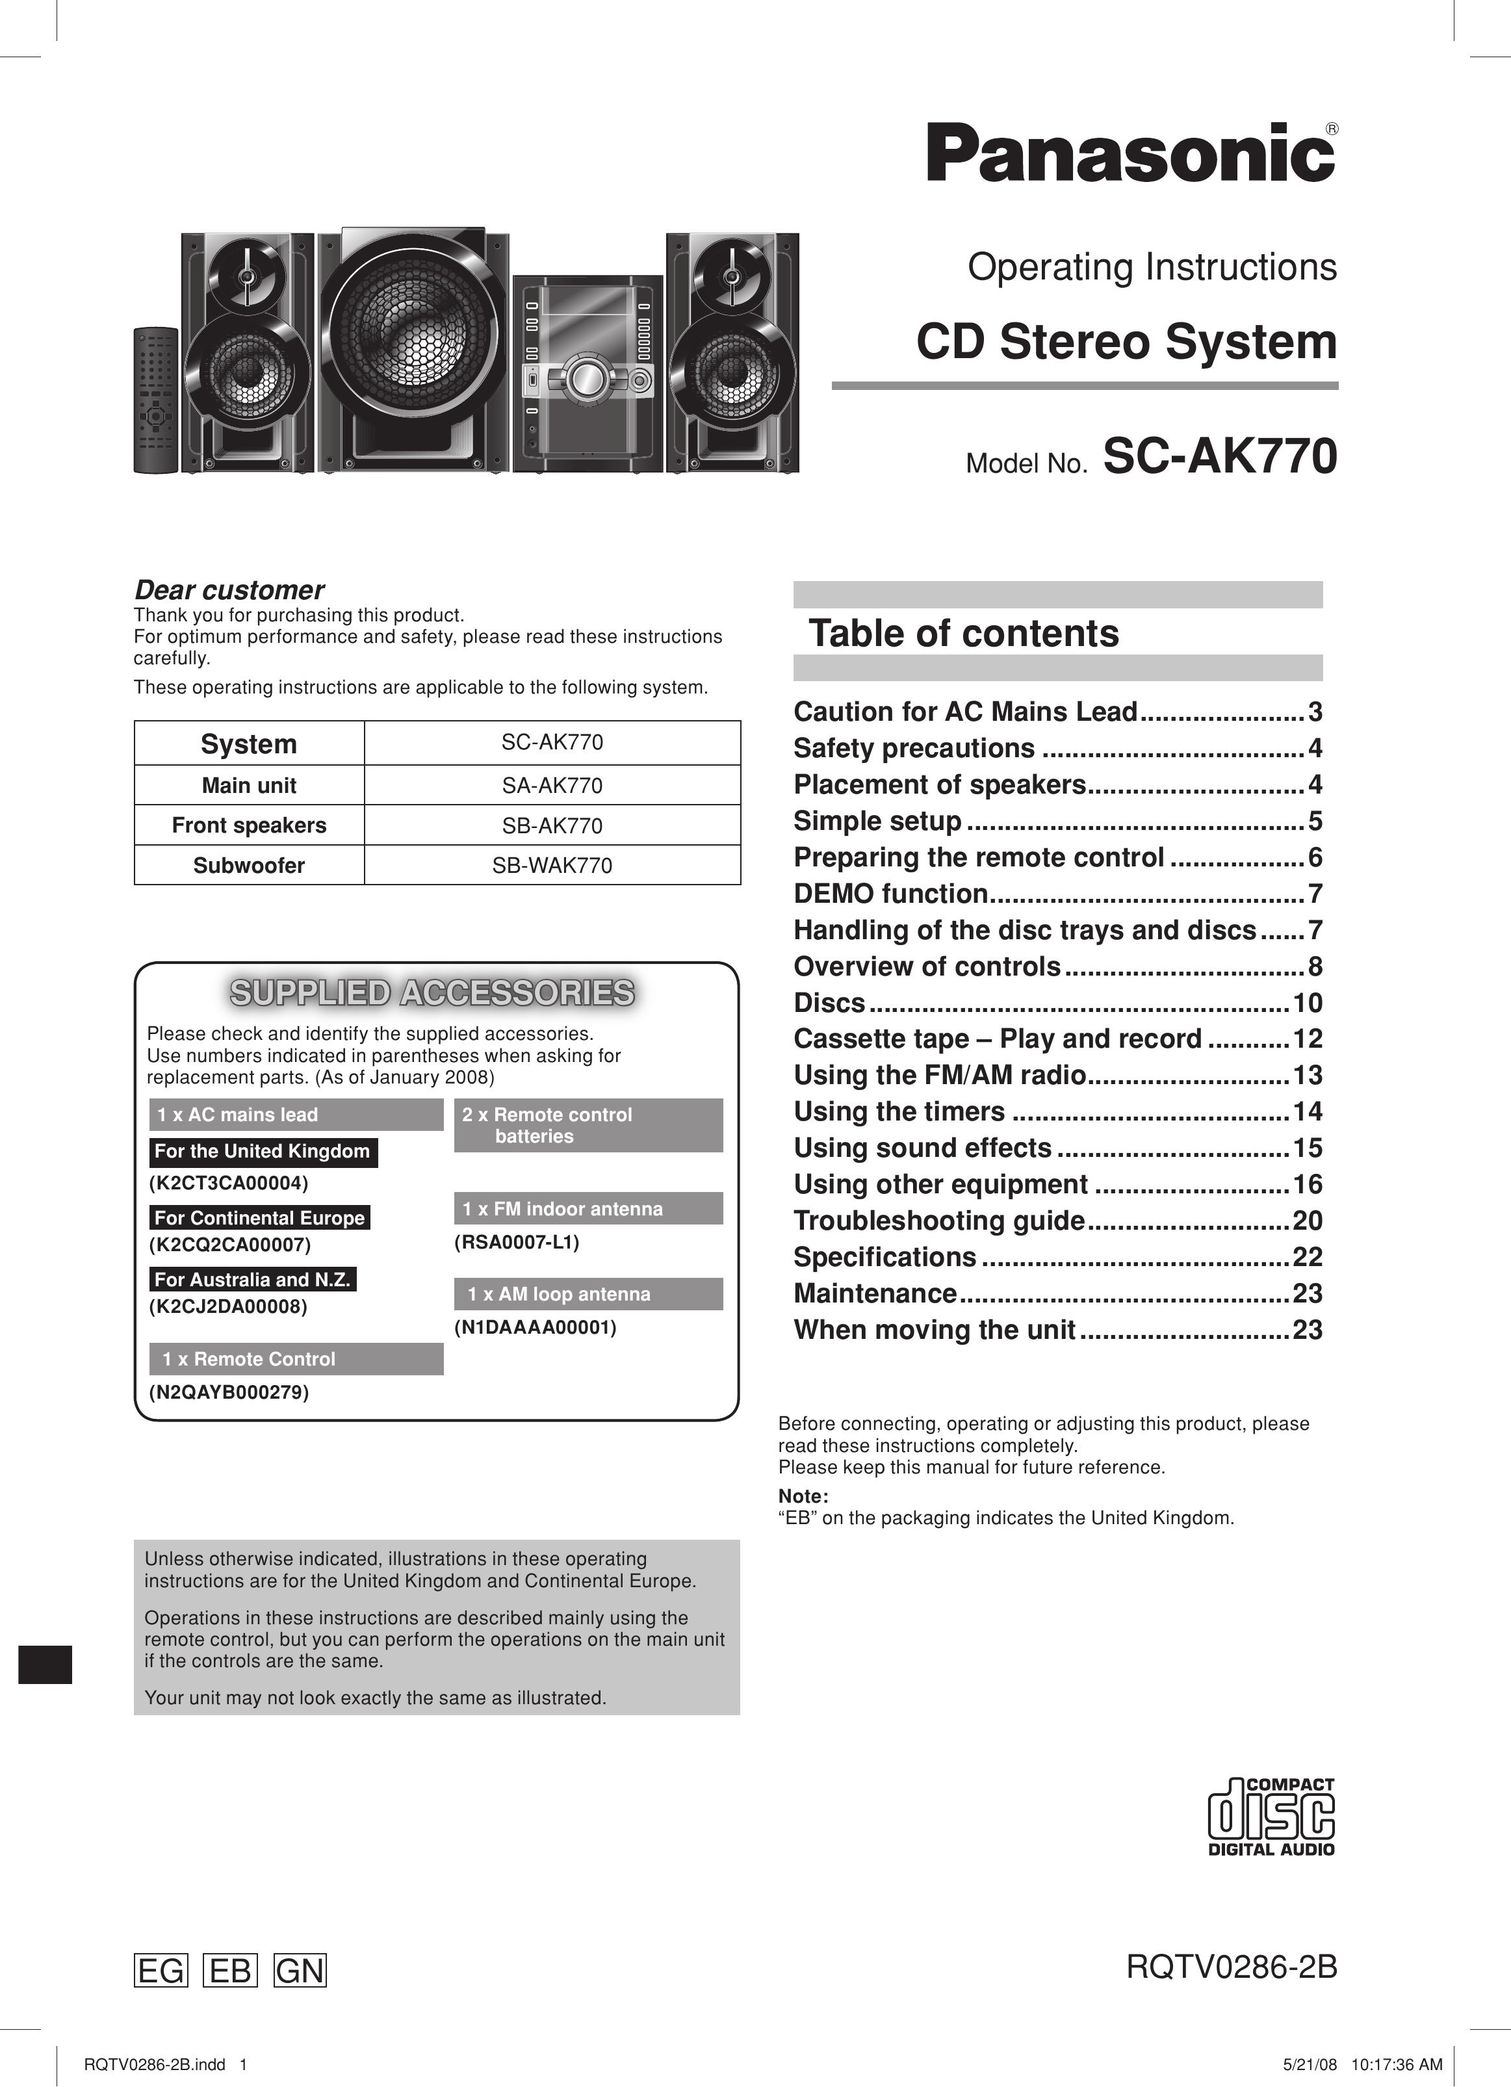 Panasonic SA-AK770 Stereo System User Manual